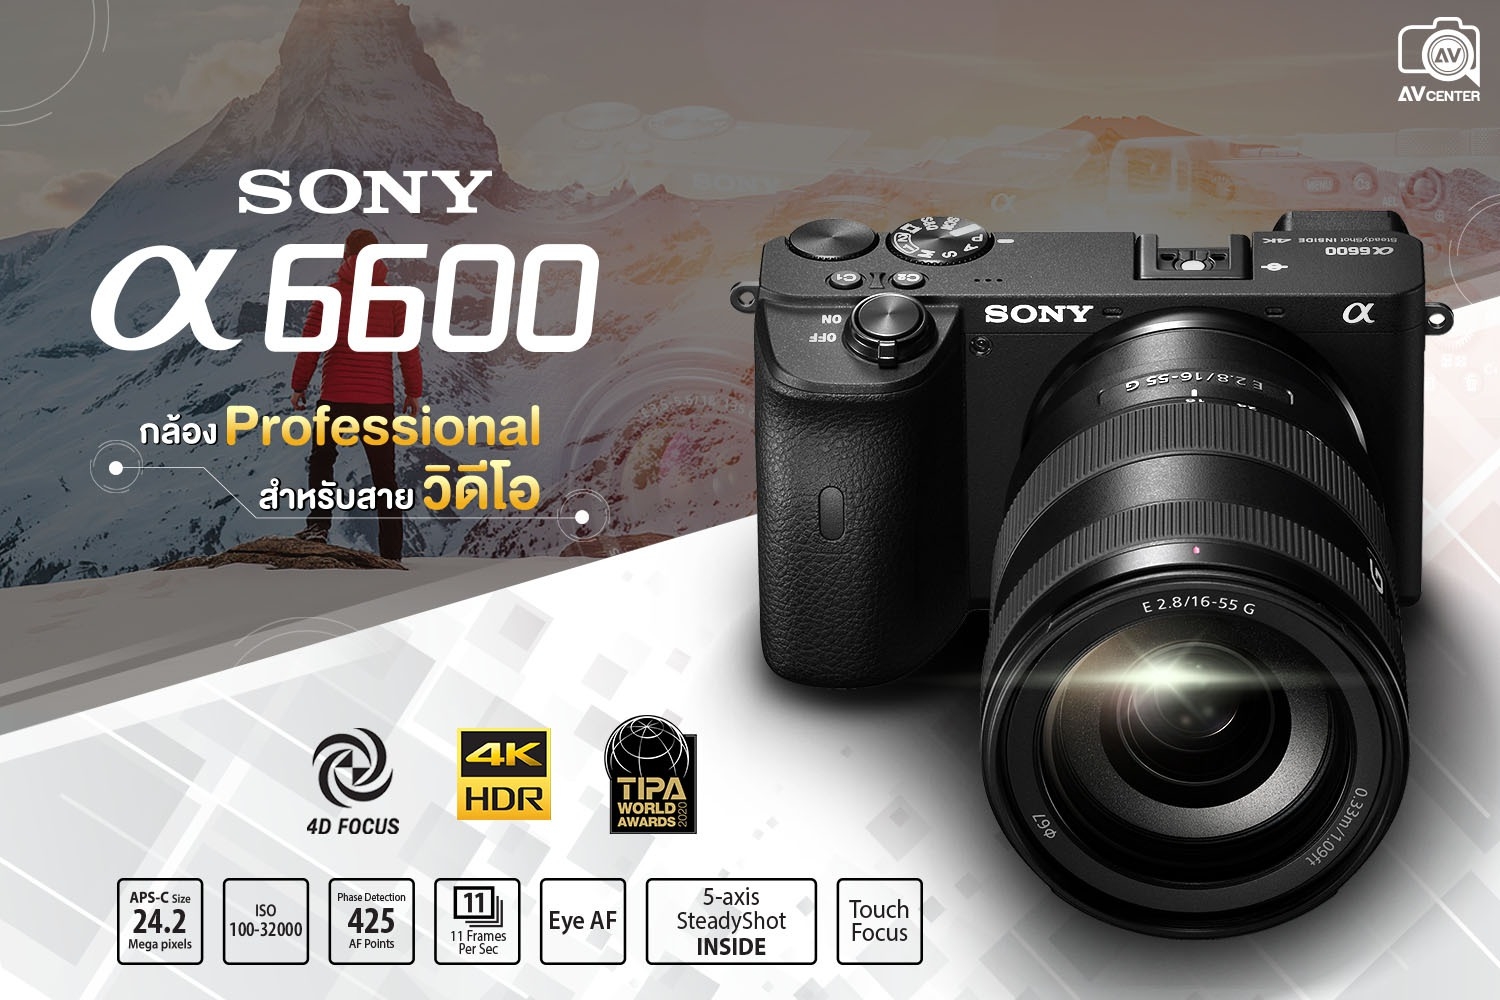 SONY A6600 กล้อง Professional สำหรับสายวิดีโอ